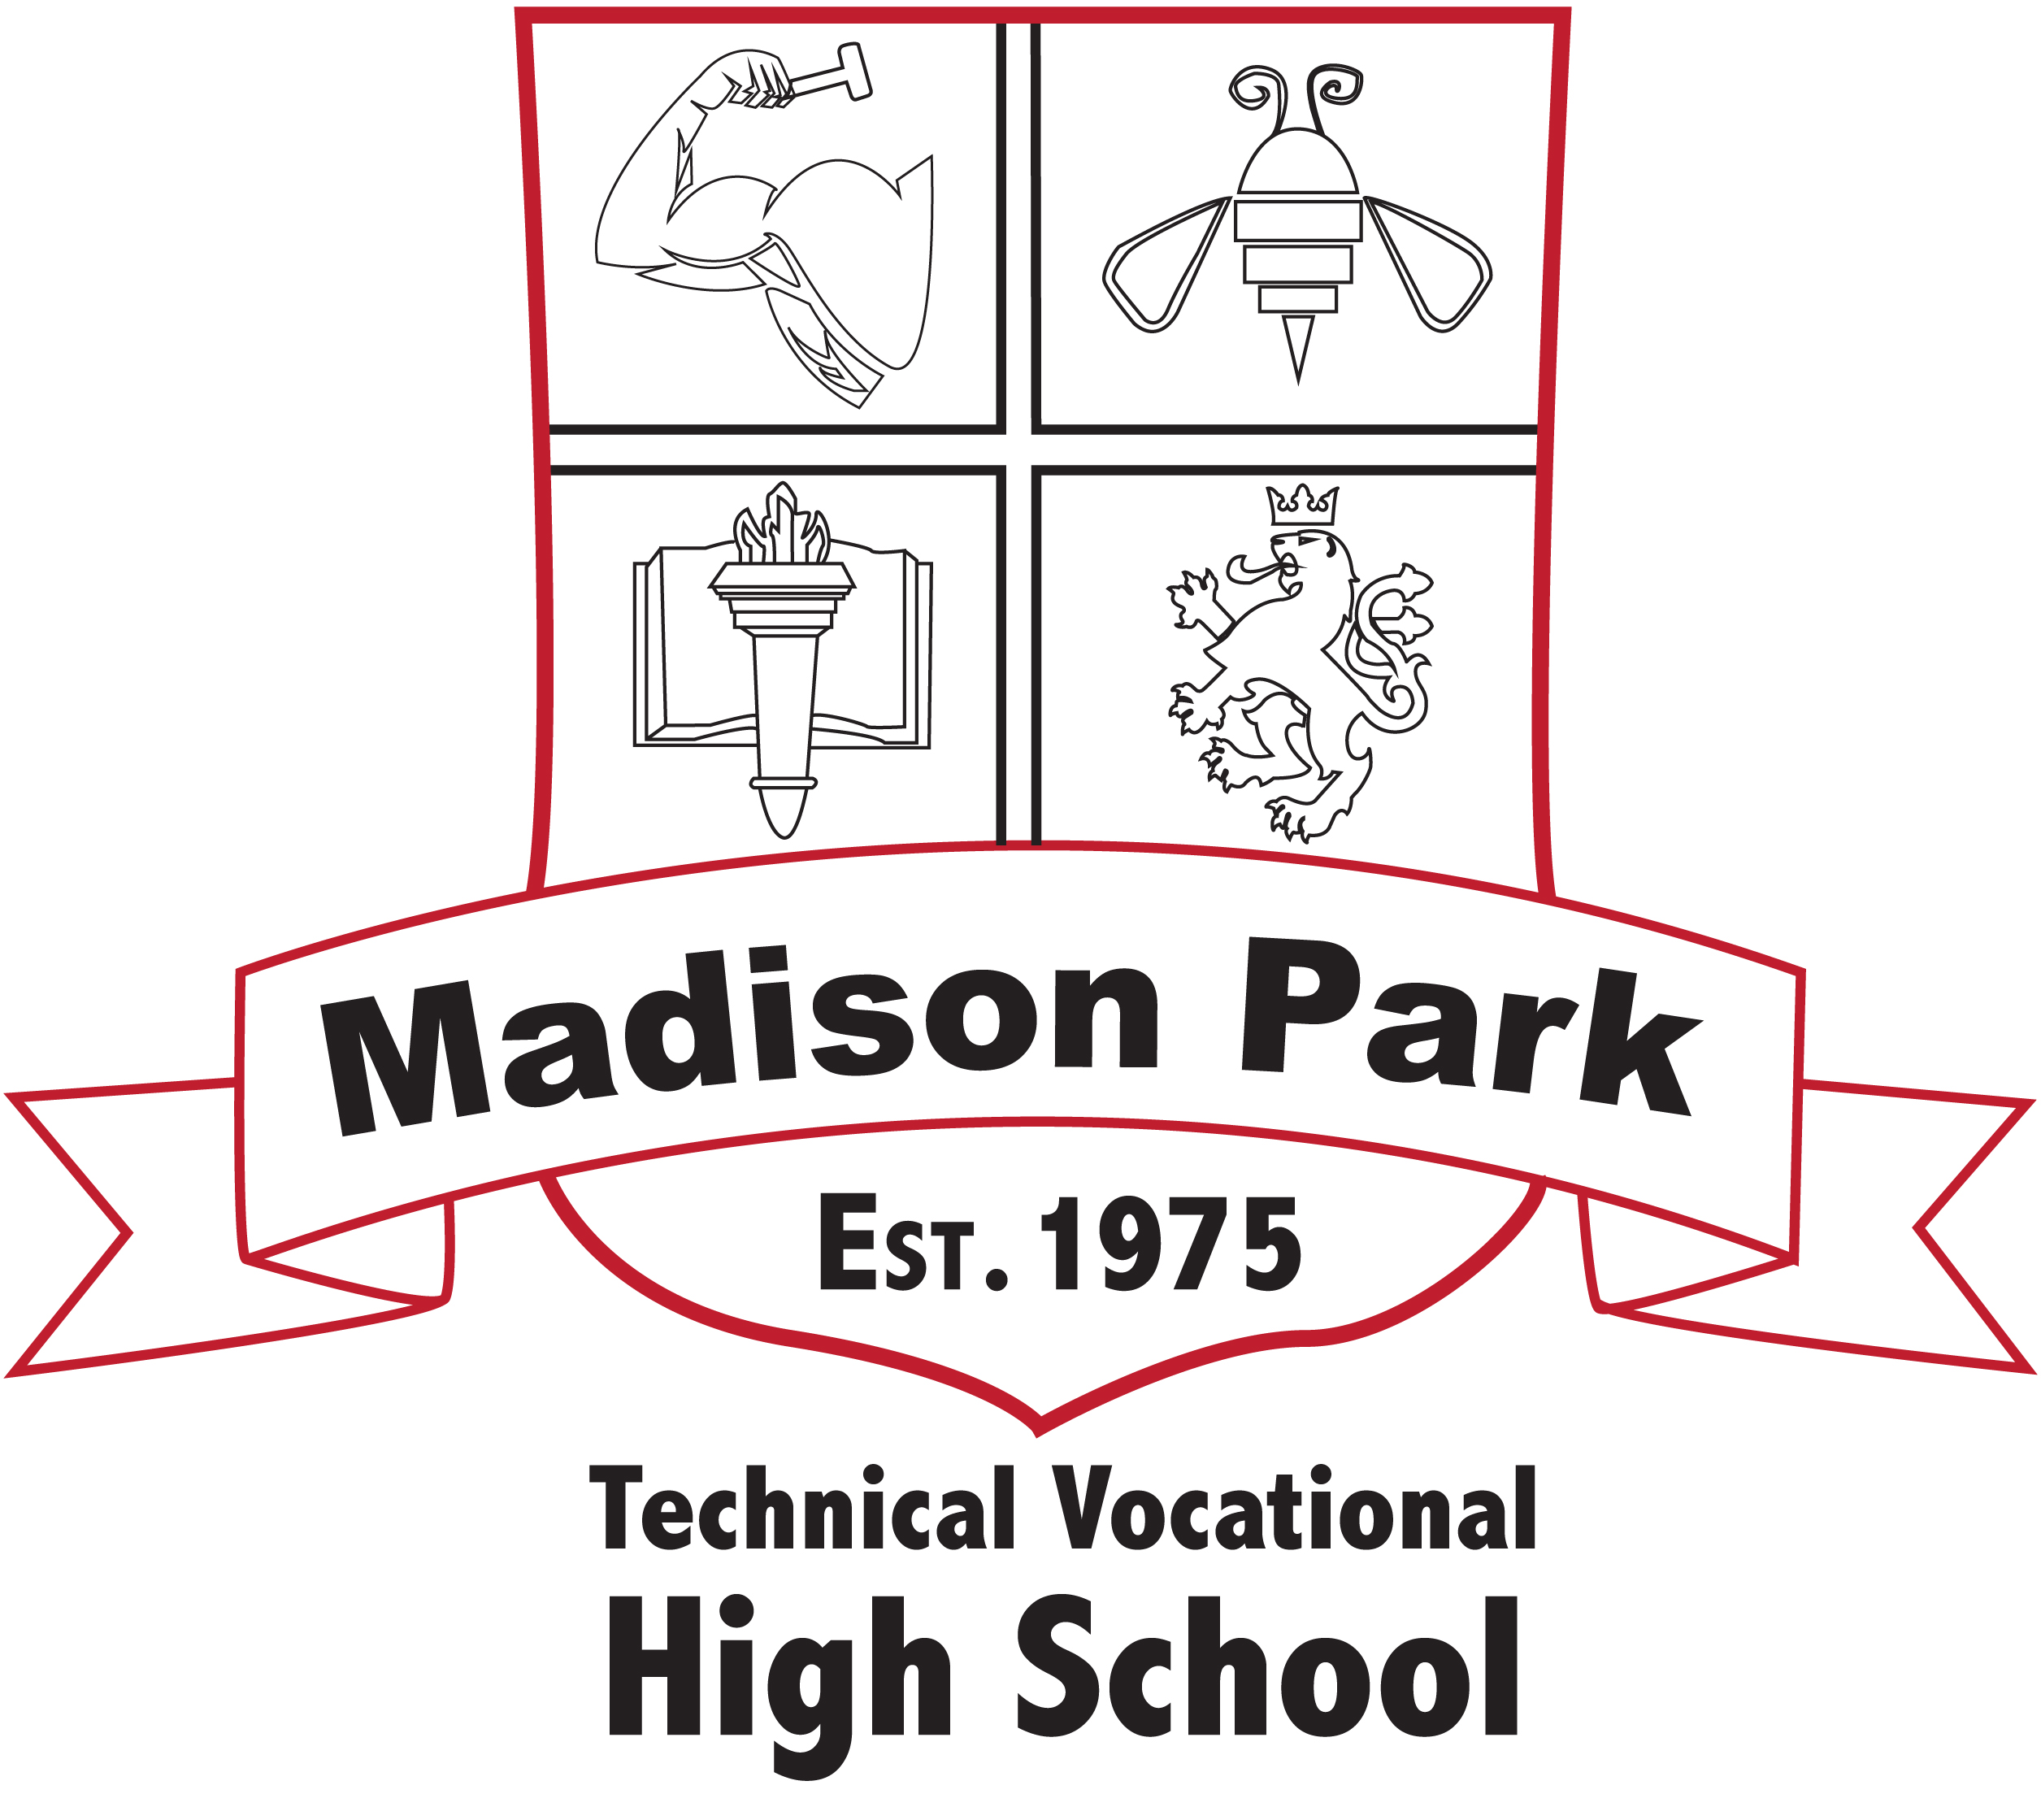 Madison Park Technical Vocational High School